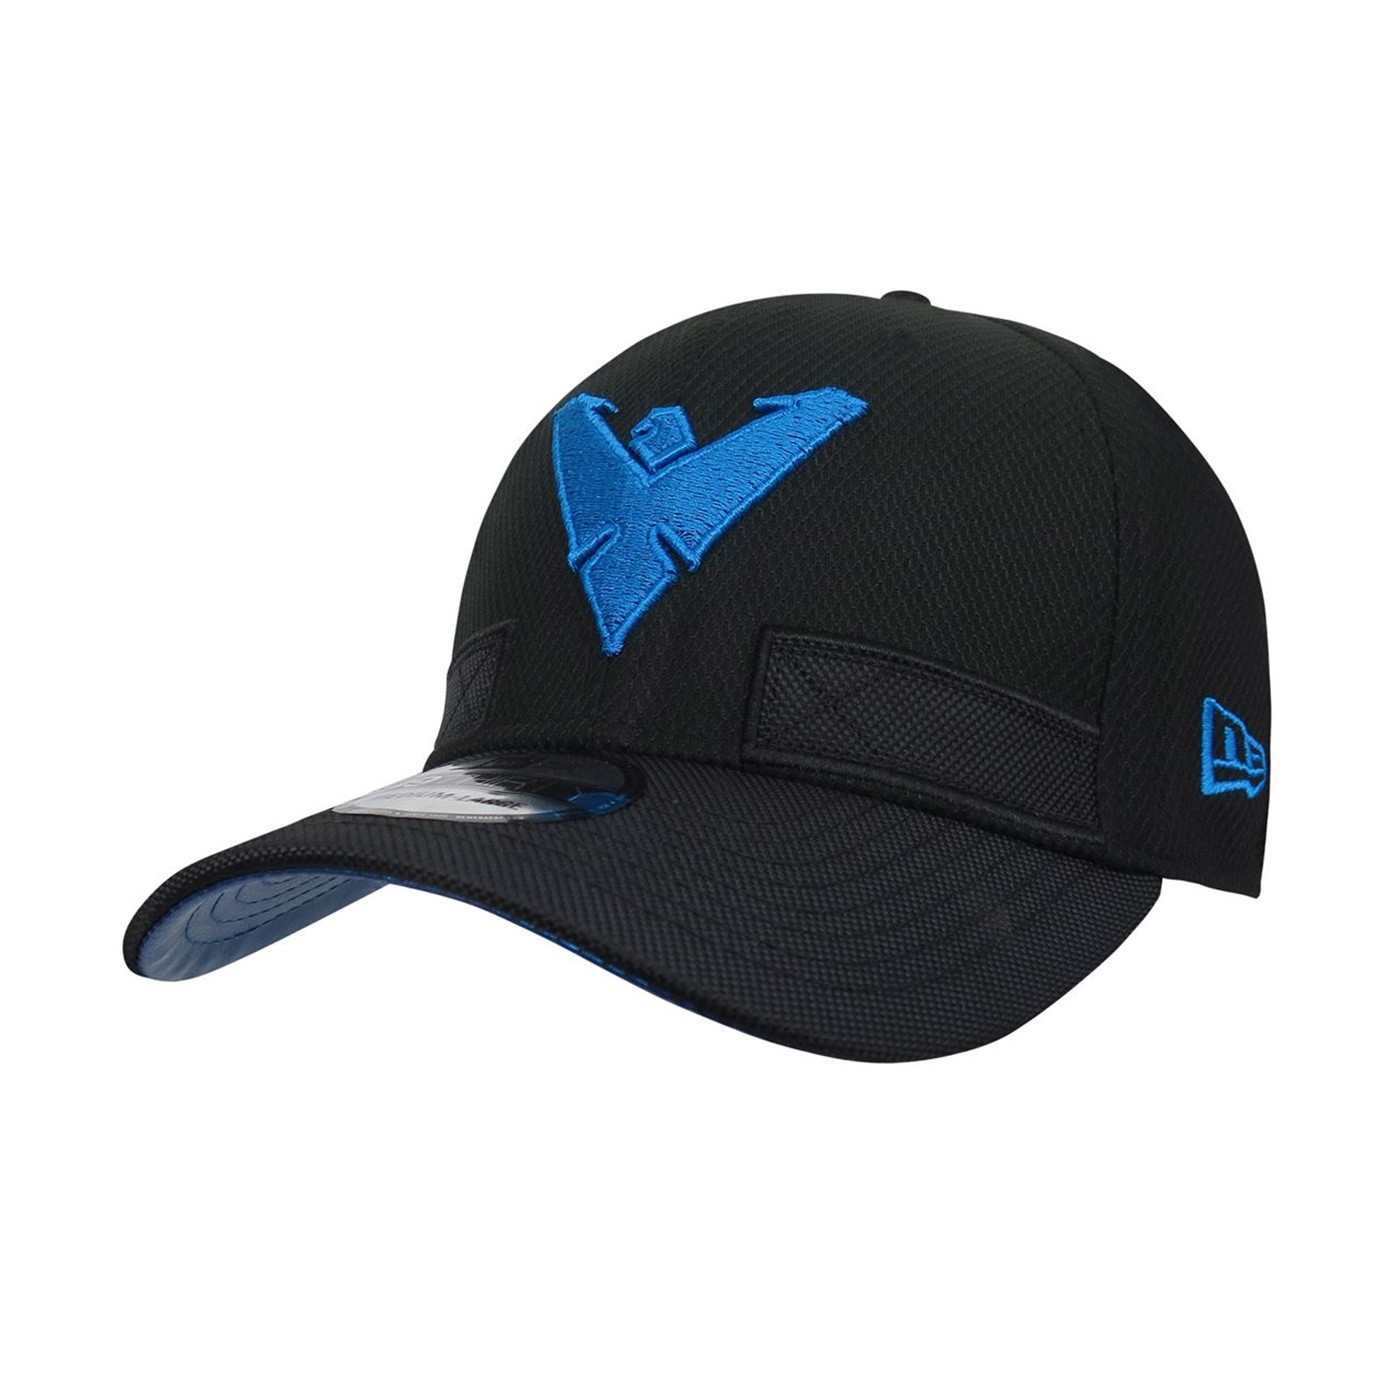 Nightwing hat